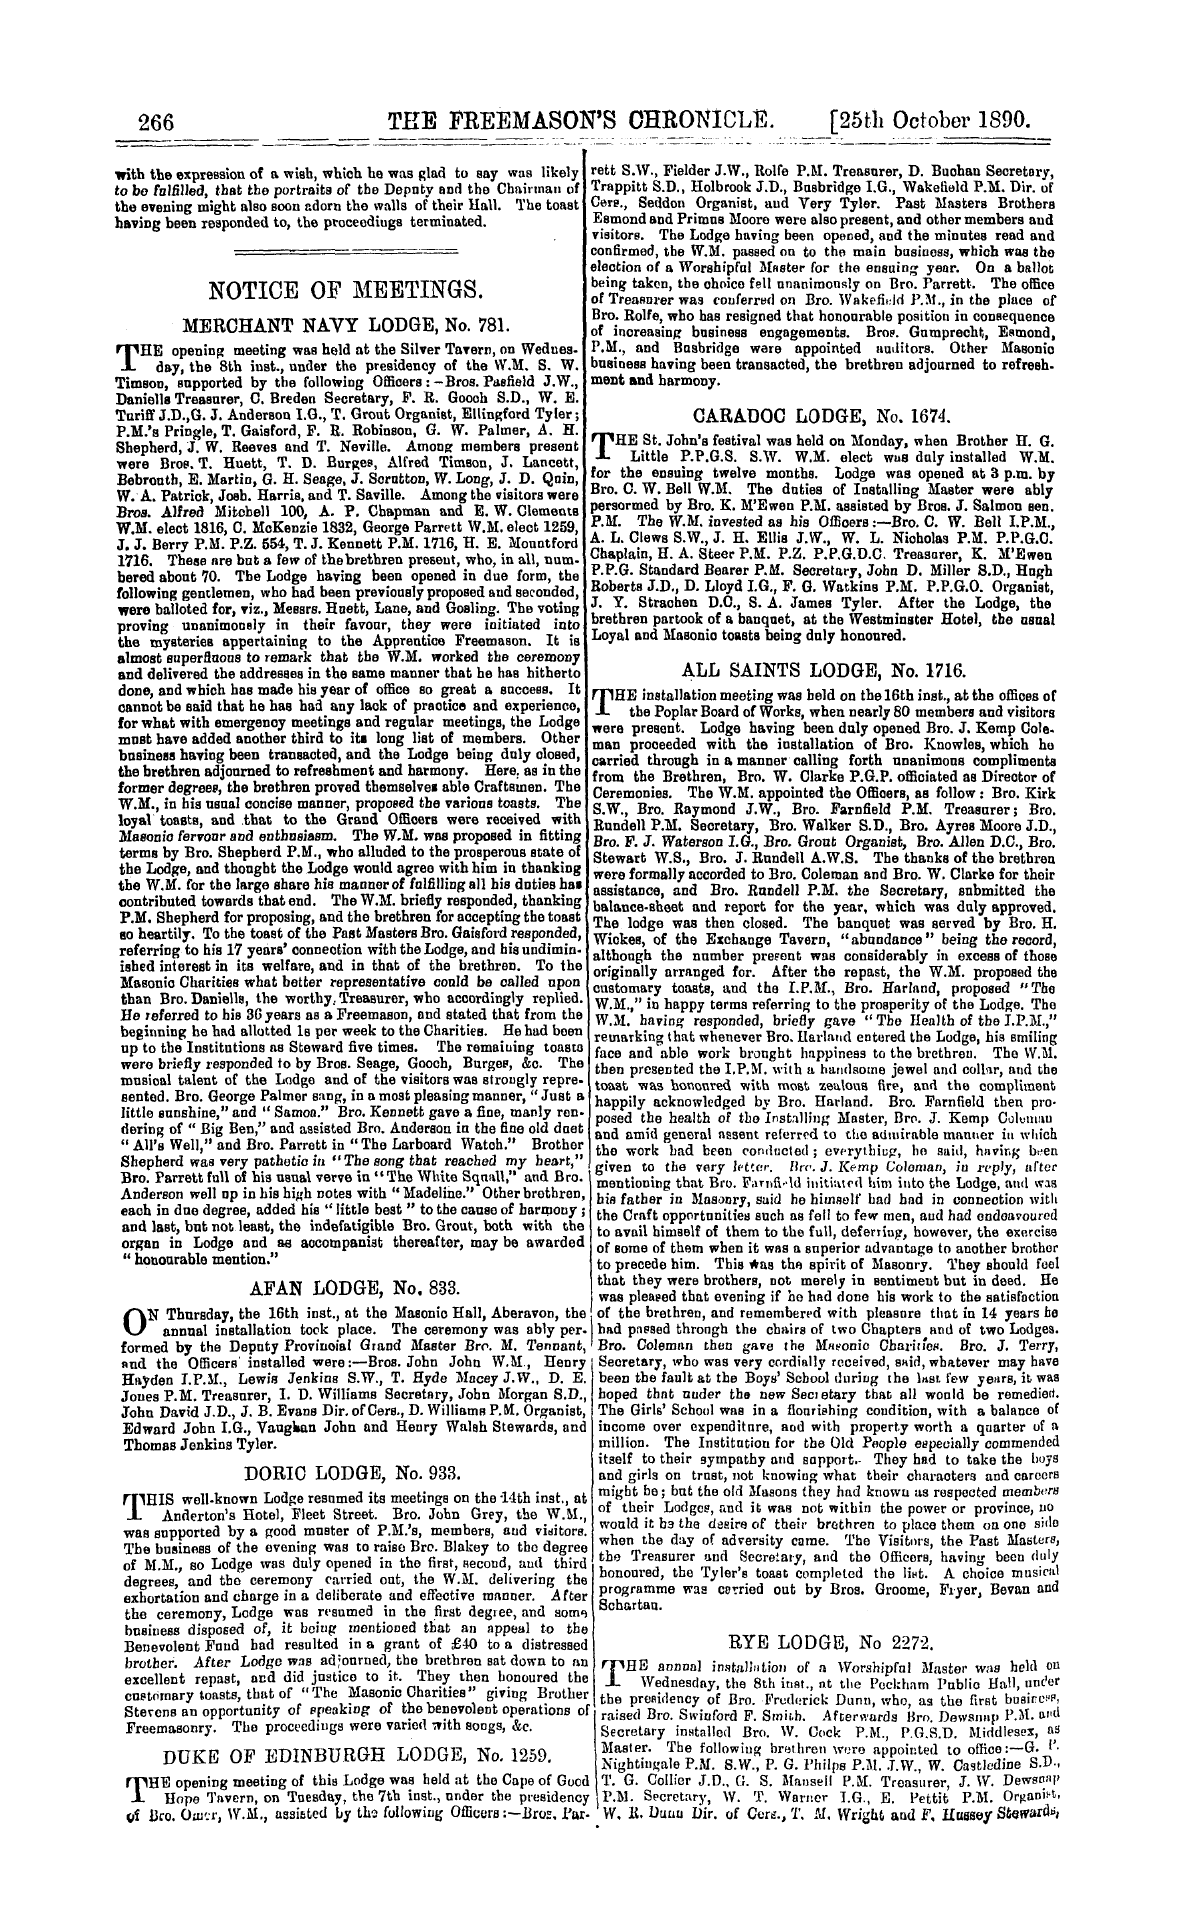 The Freemason's Chronicle: 1890-10-25 - Presentation At Cheltenham.